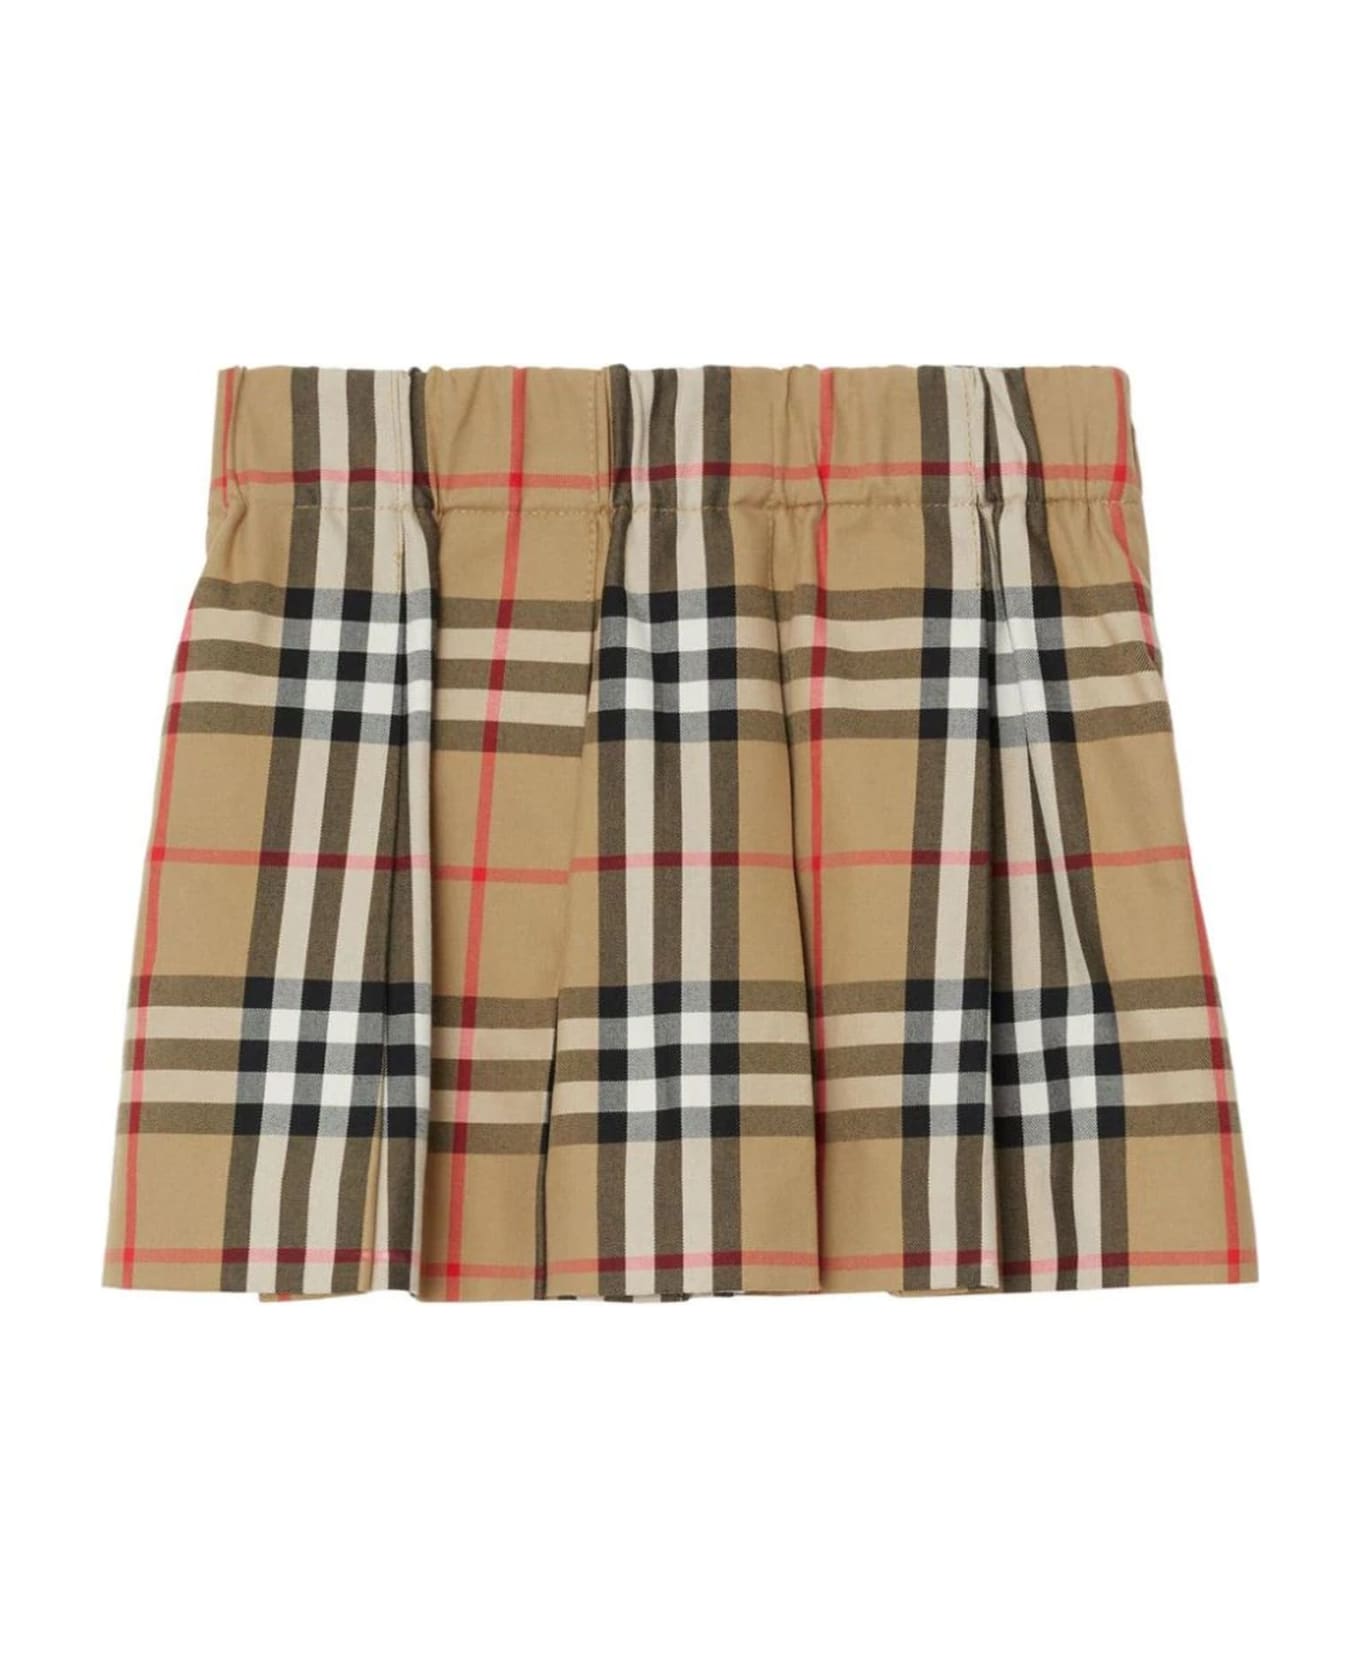 Burberry Beige Cotton Skirt - Archive Beige Ip Check